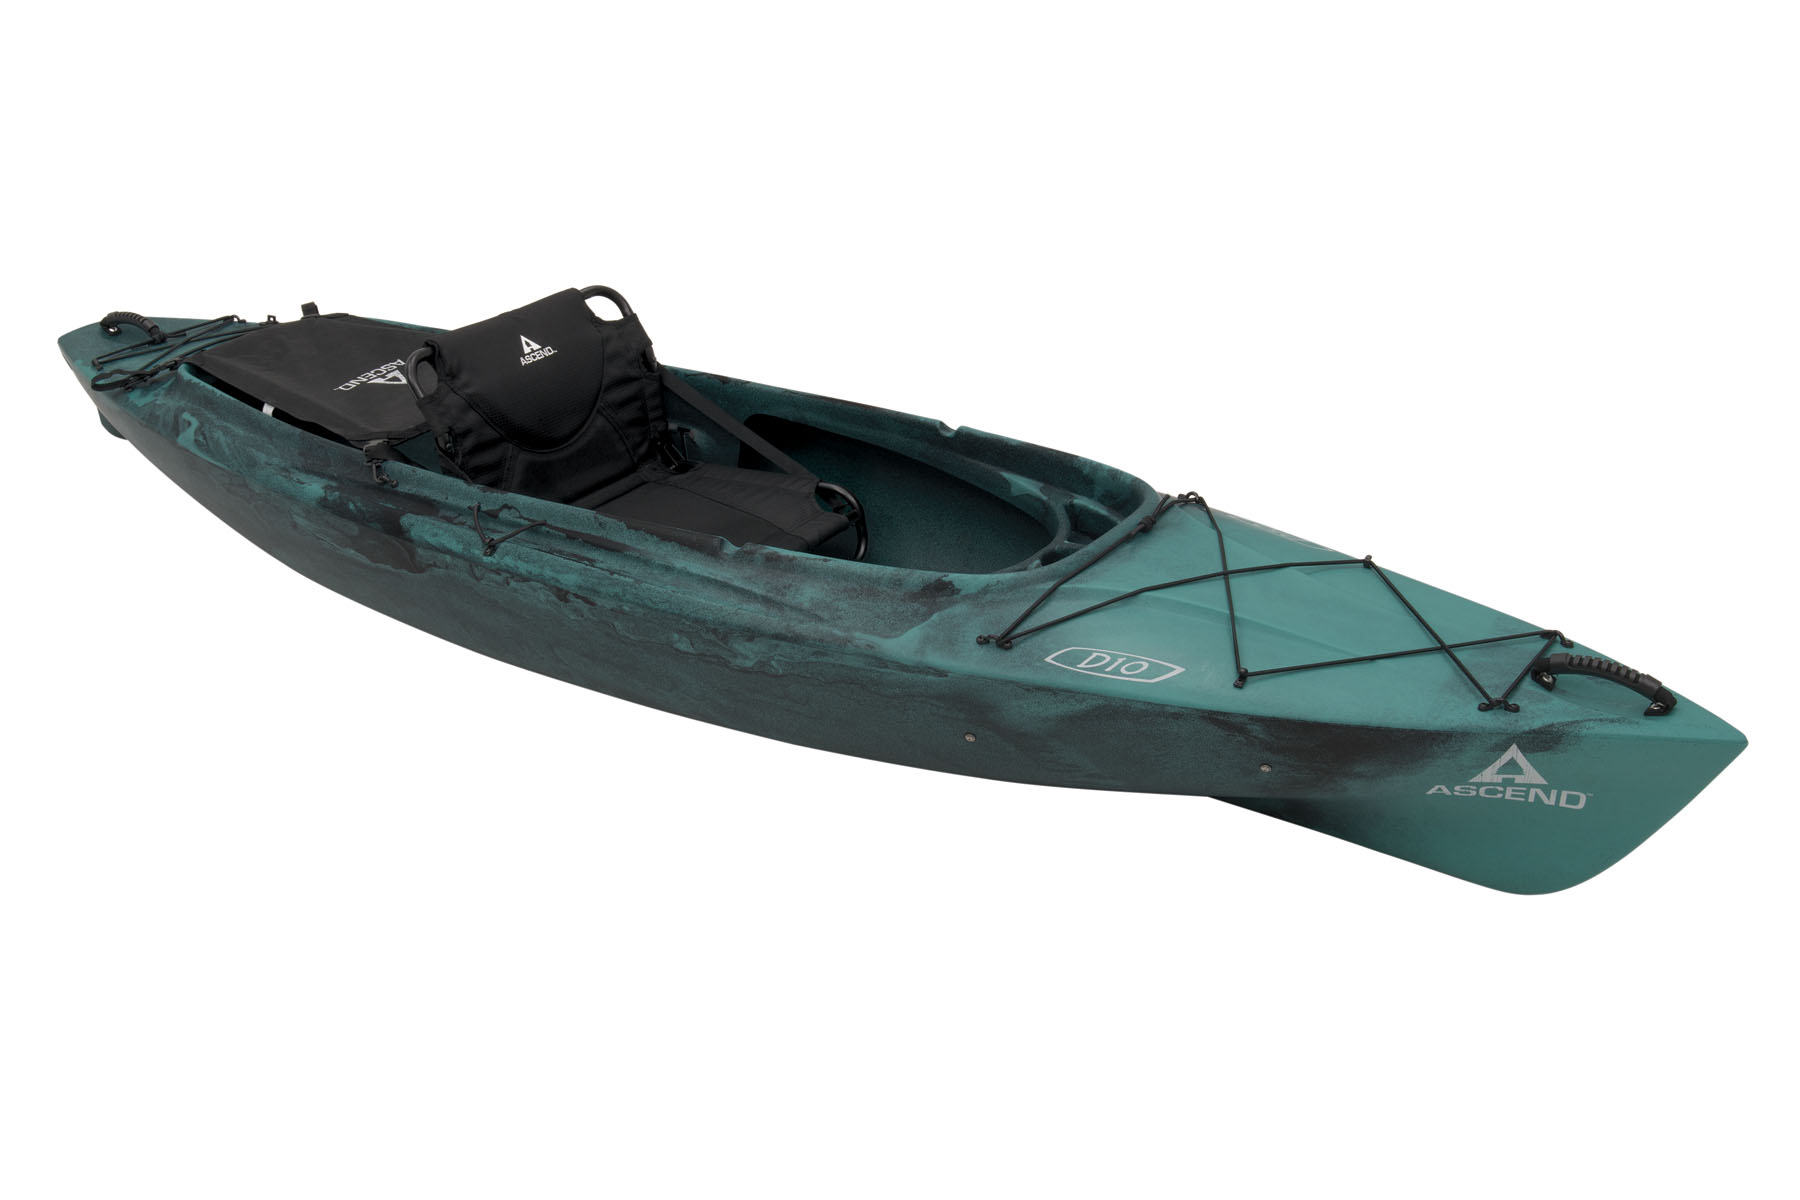 Kayak Rod Holders: 8 Top Picks on the Market Today